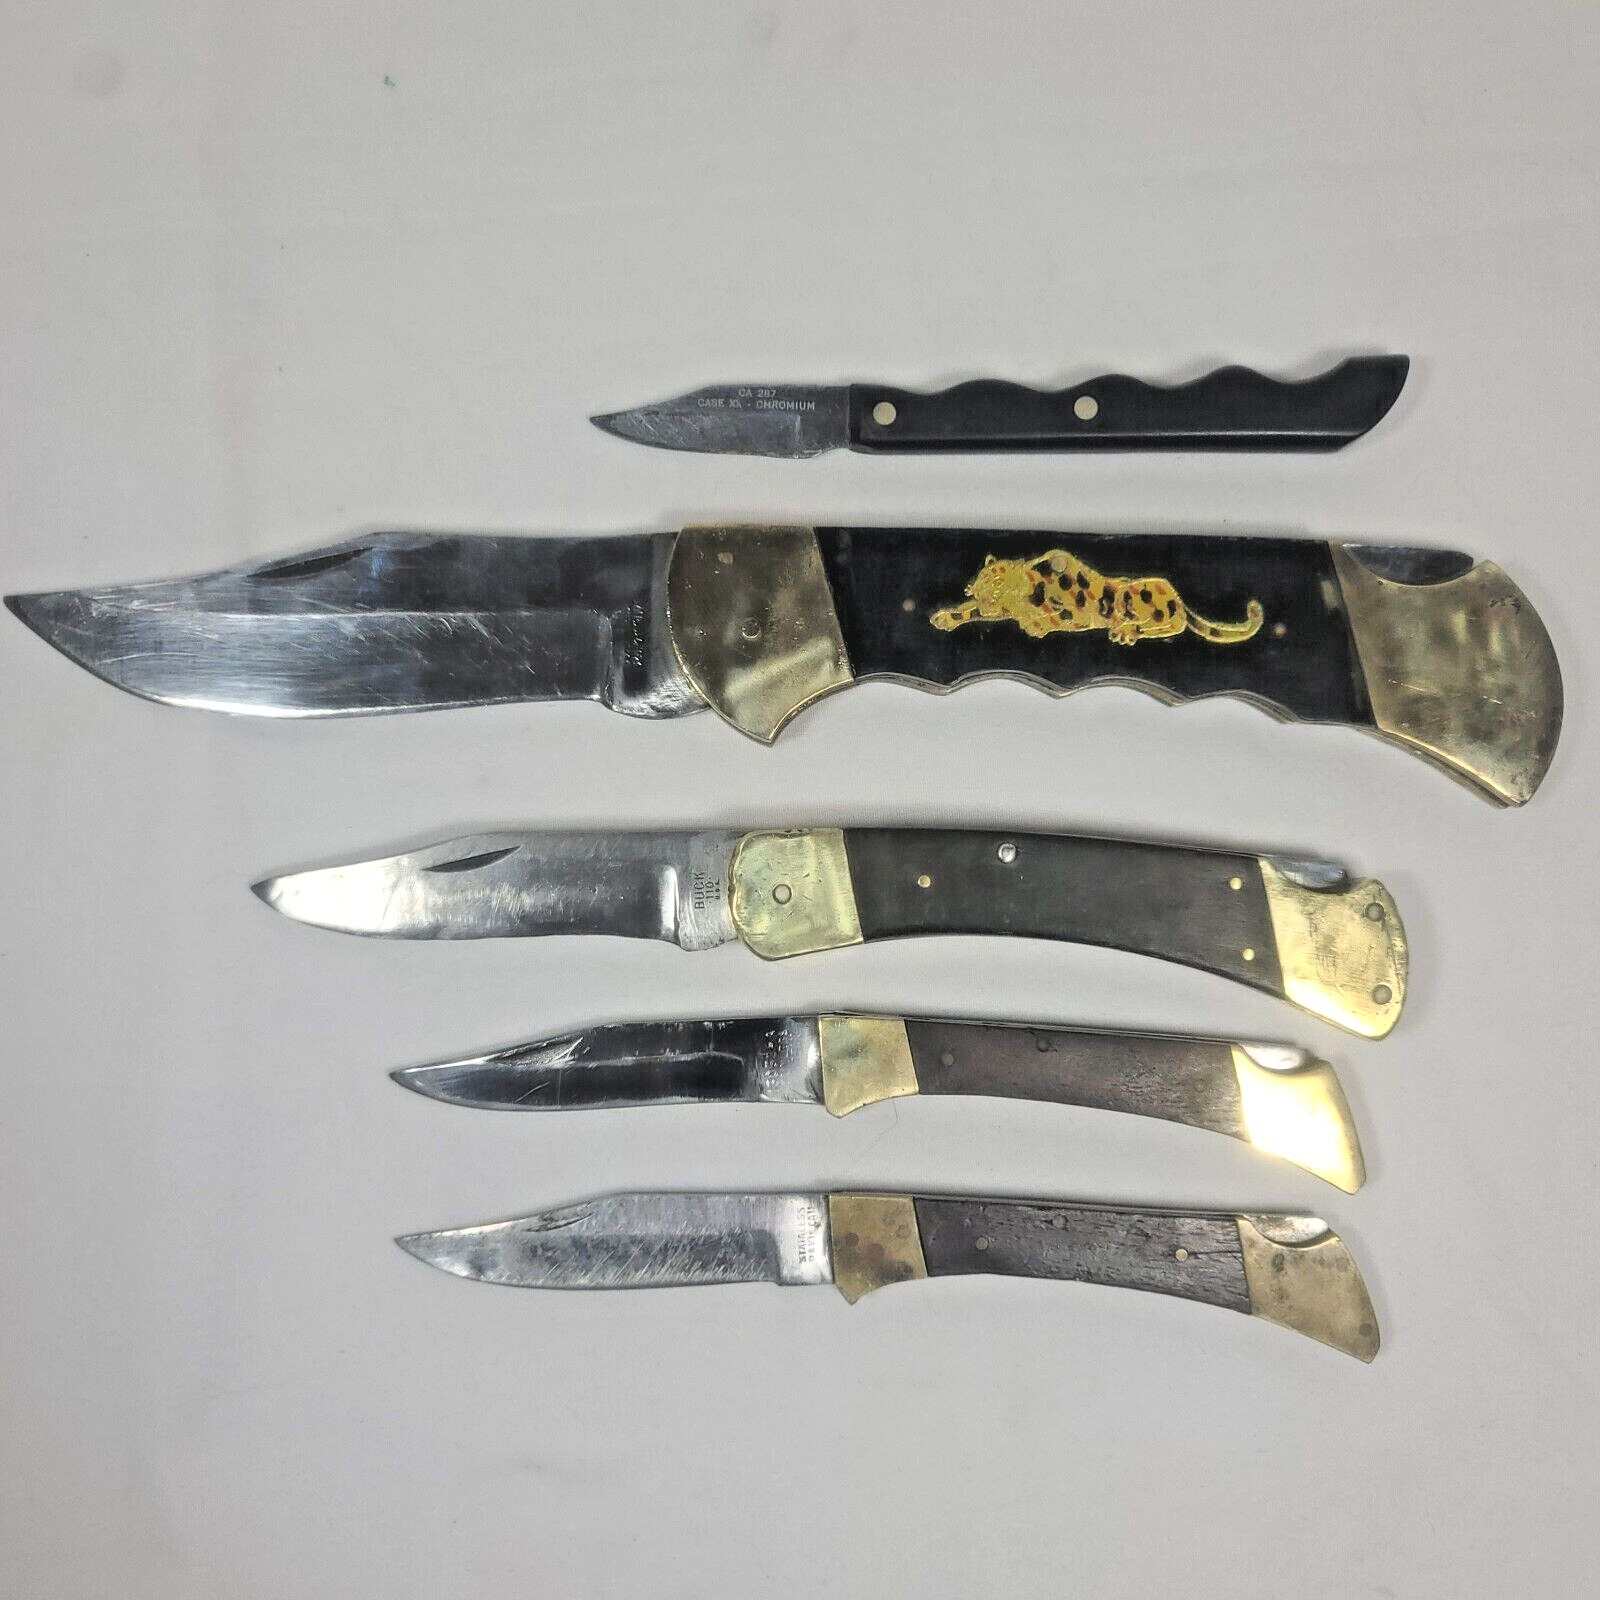 Lot of knives BUCK 110, Pakistan Folding Knives, and one random one.